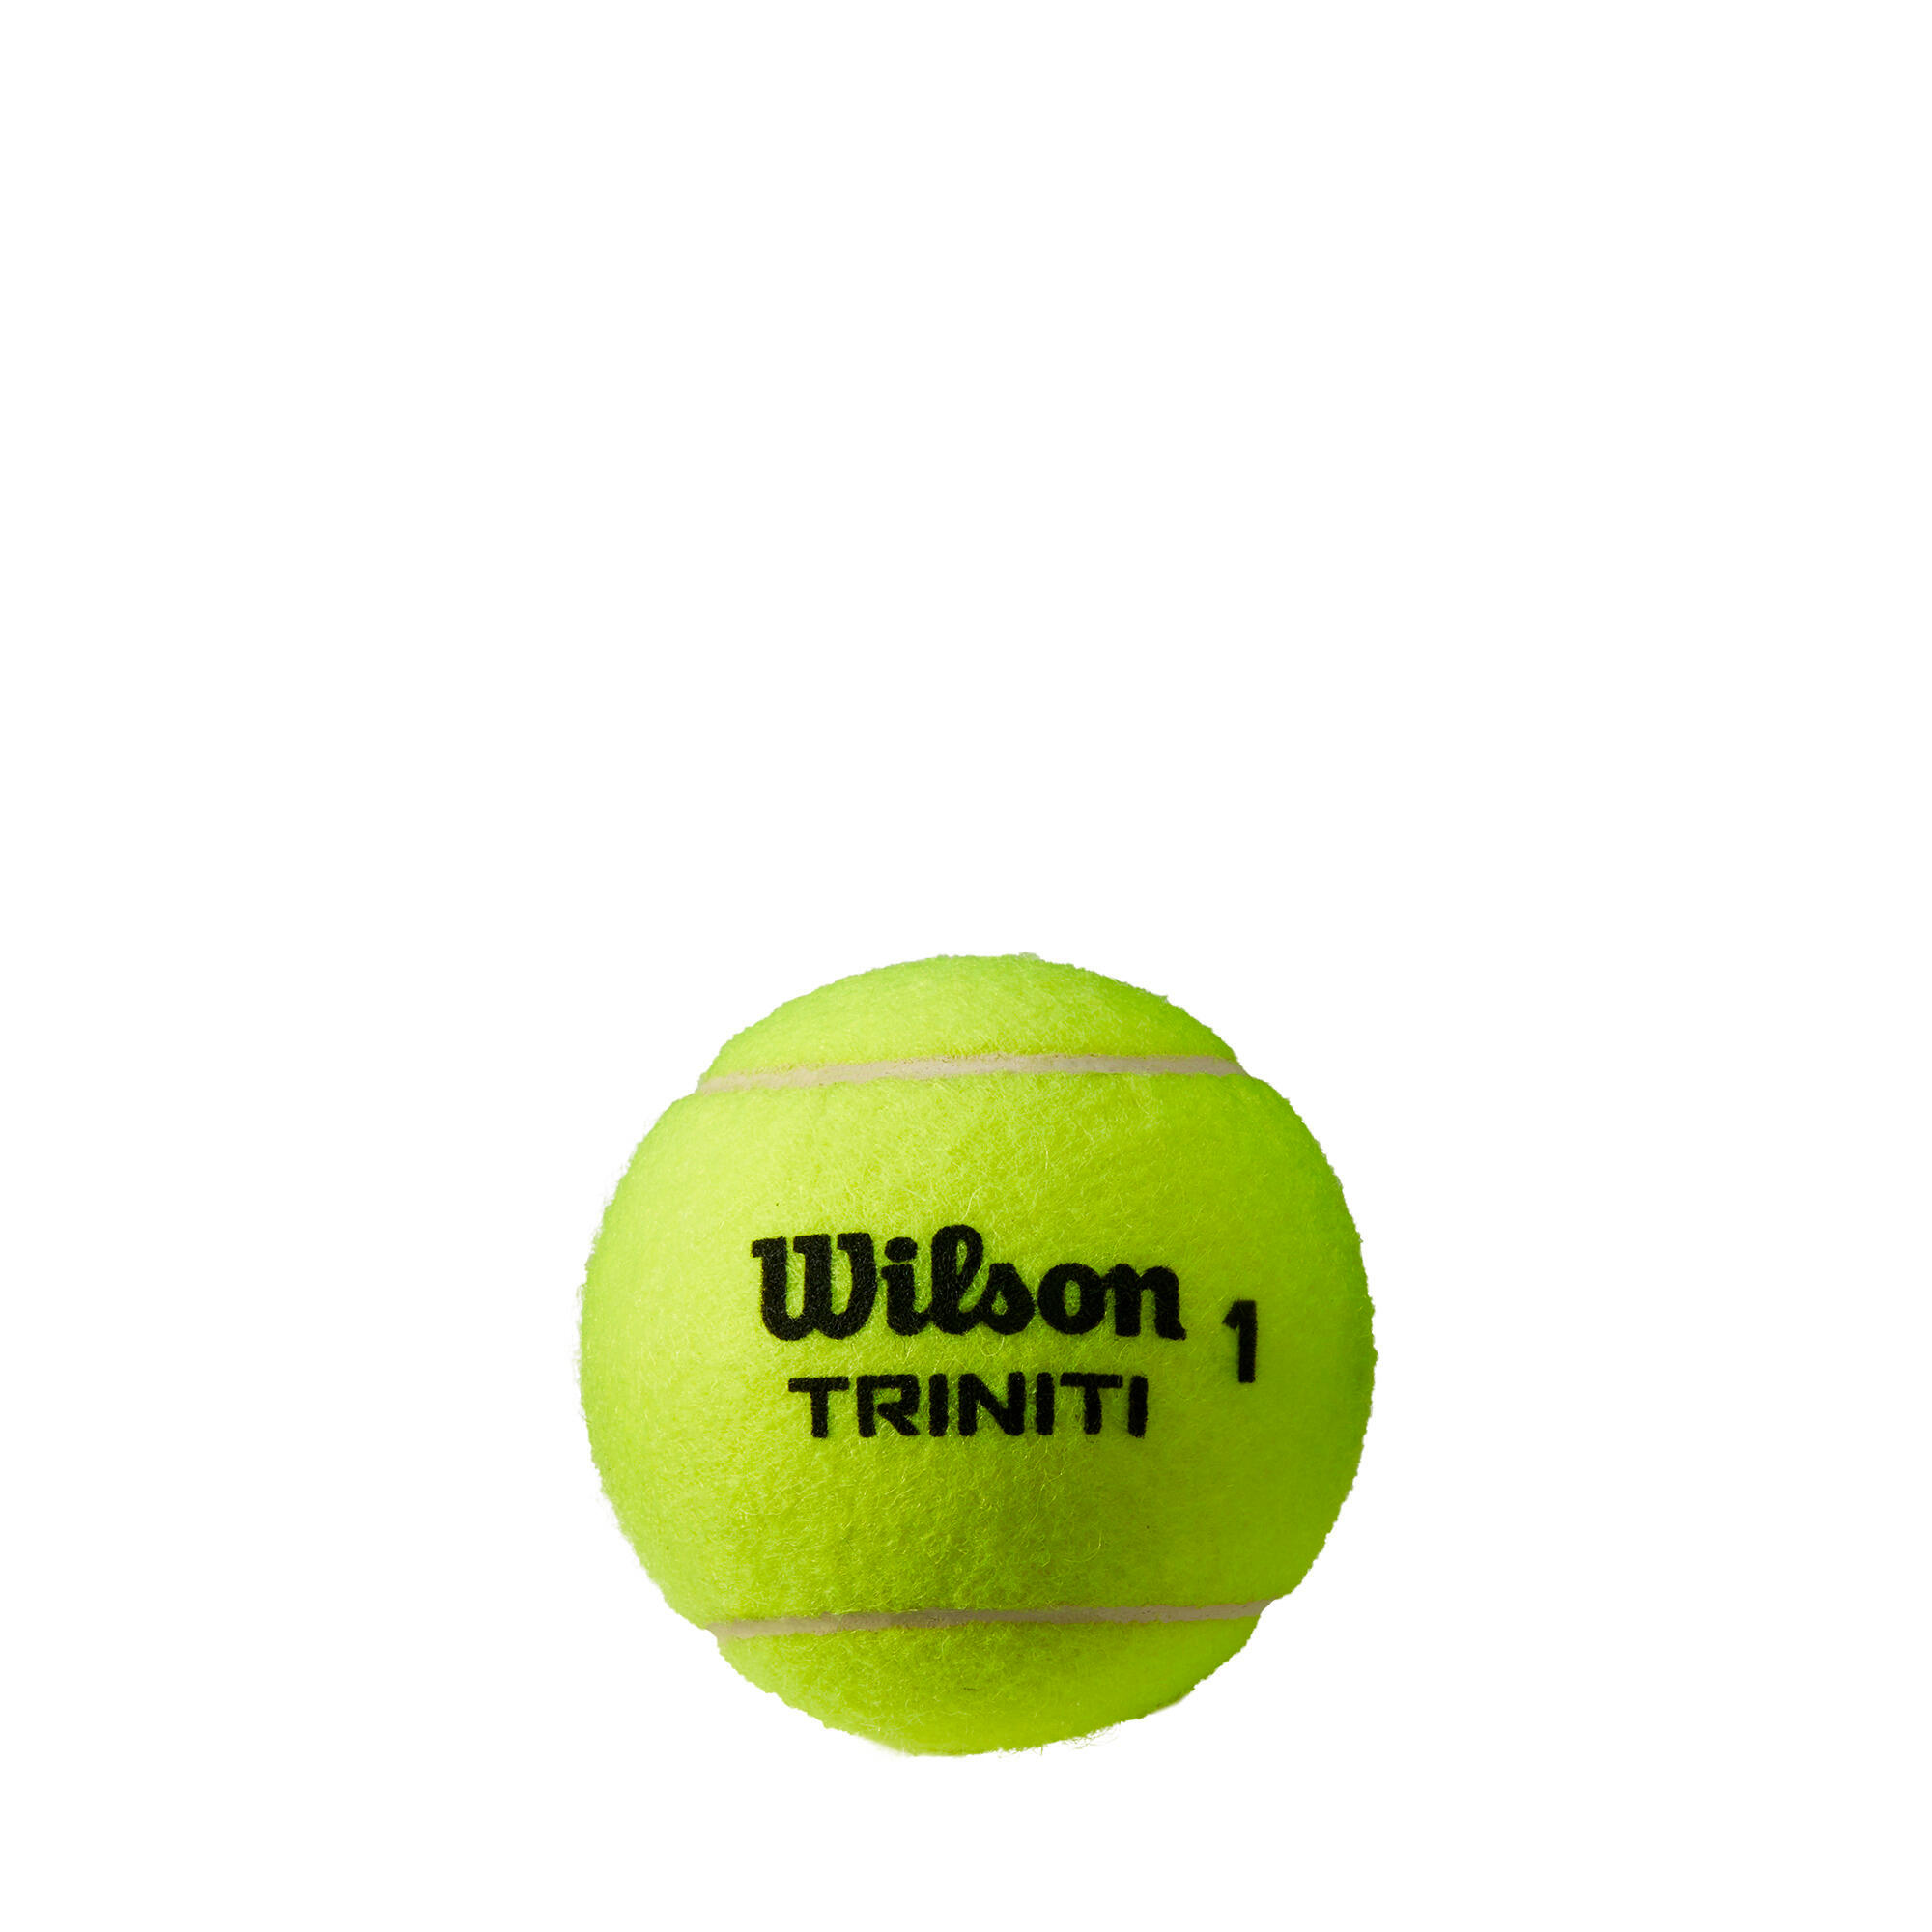 WILSON Triniti Tennis Balls (Pack of 3) (Green)